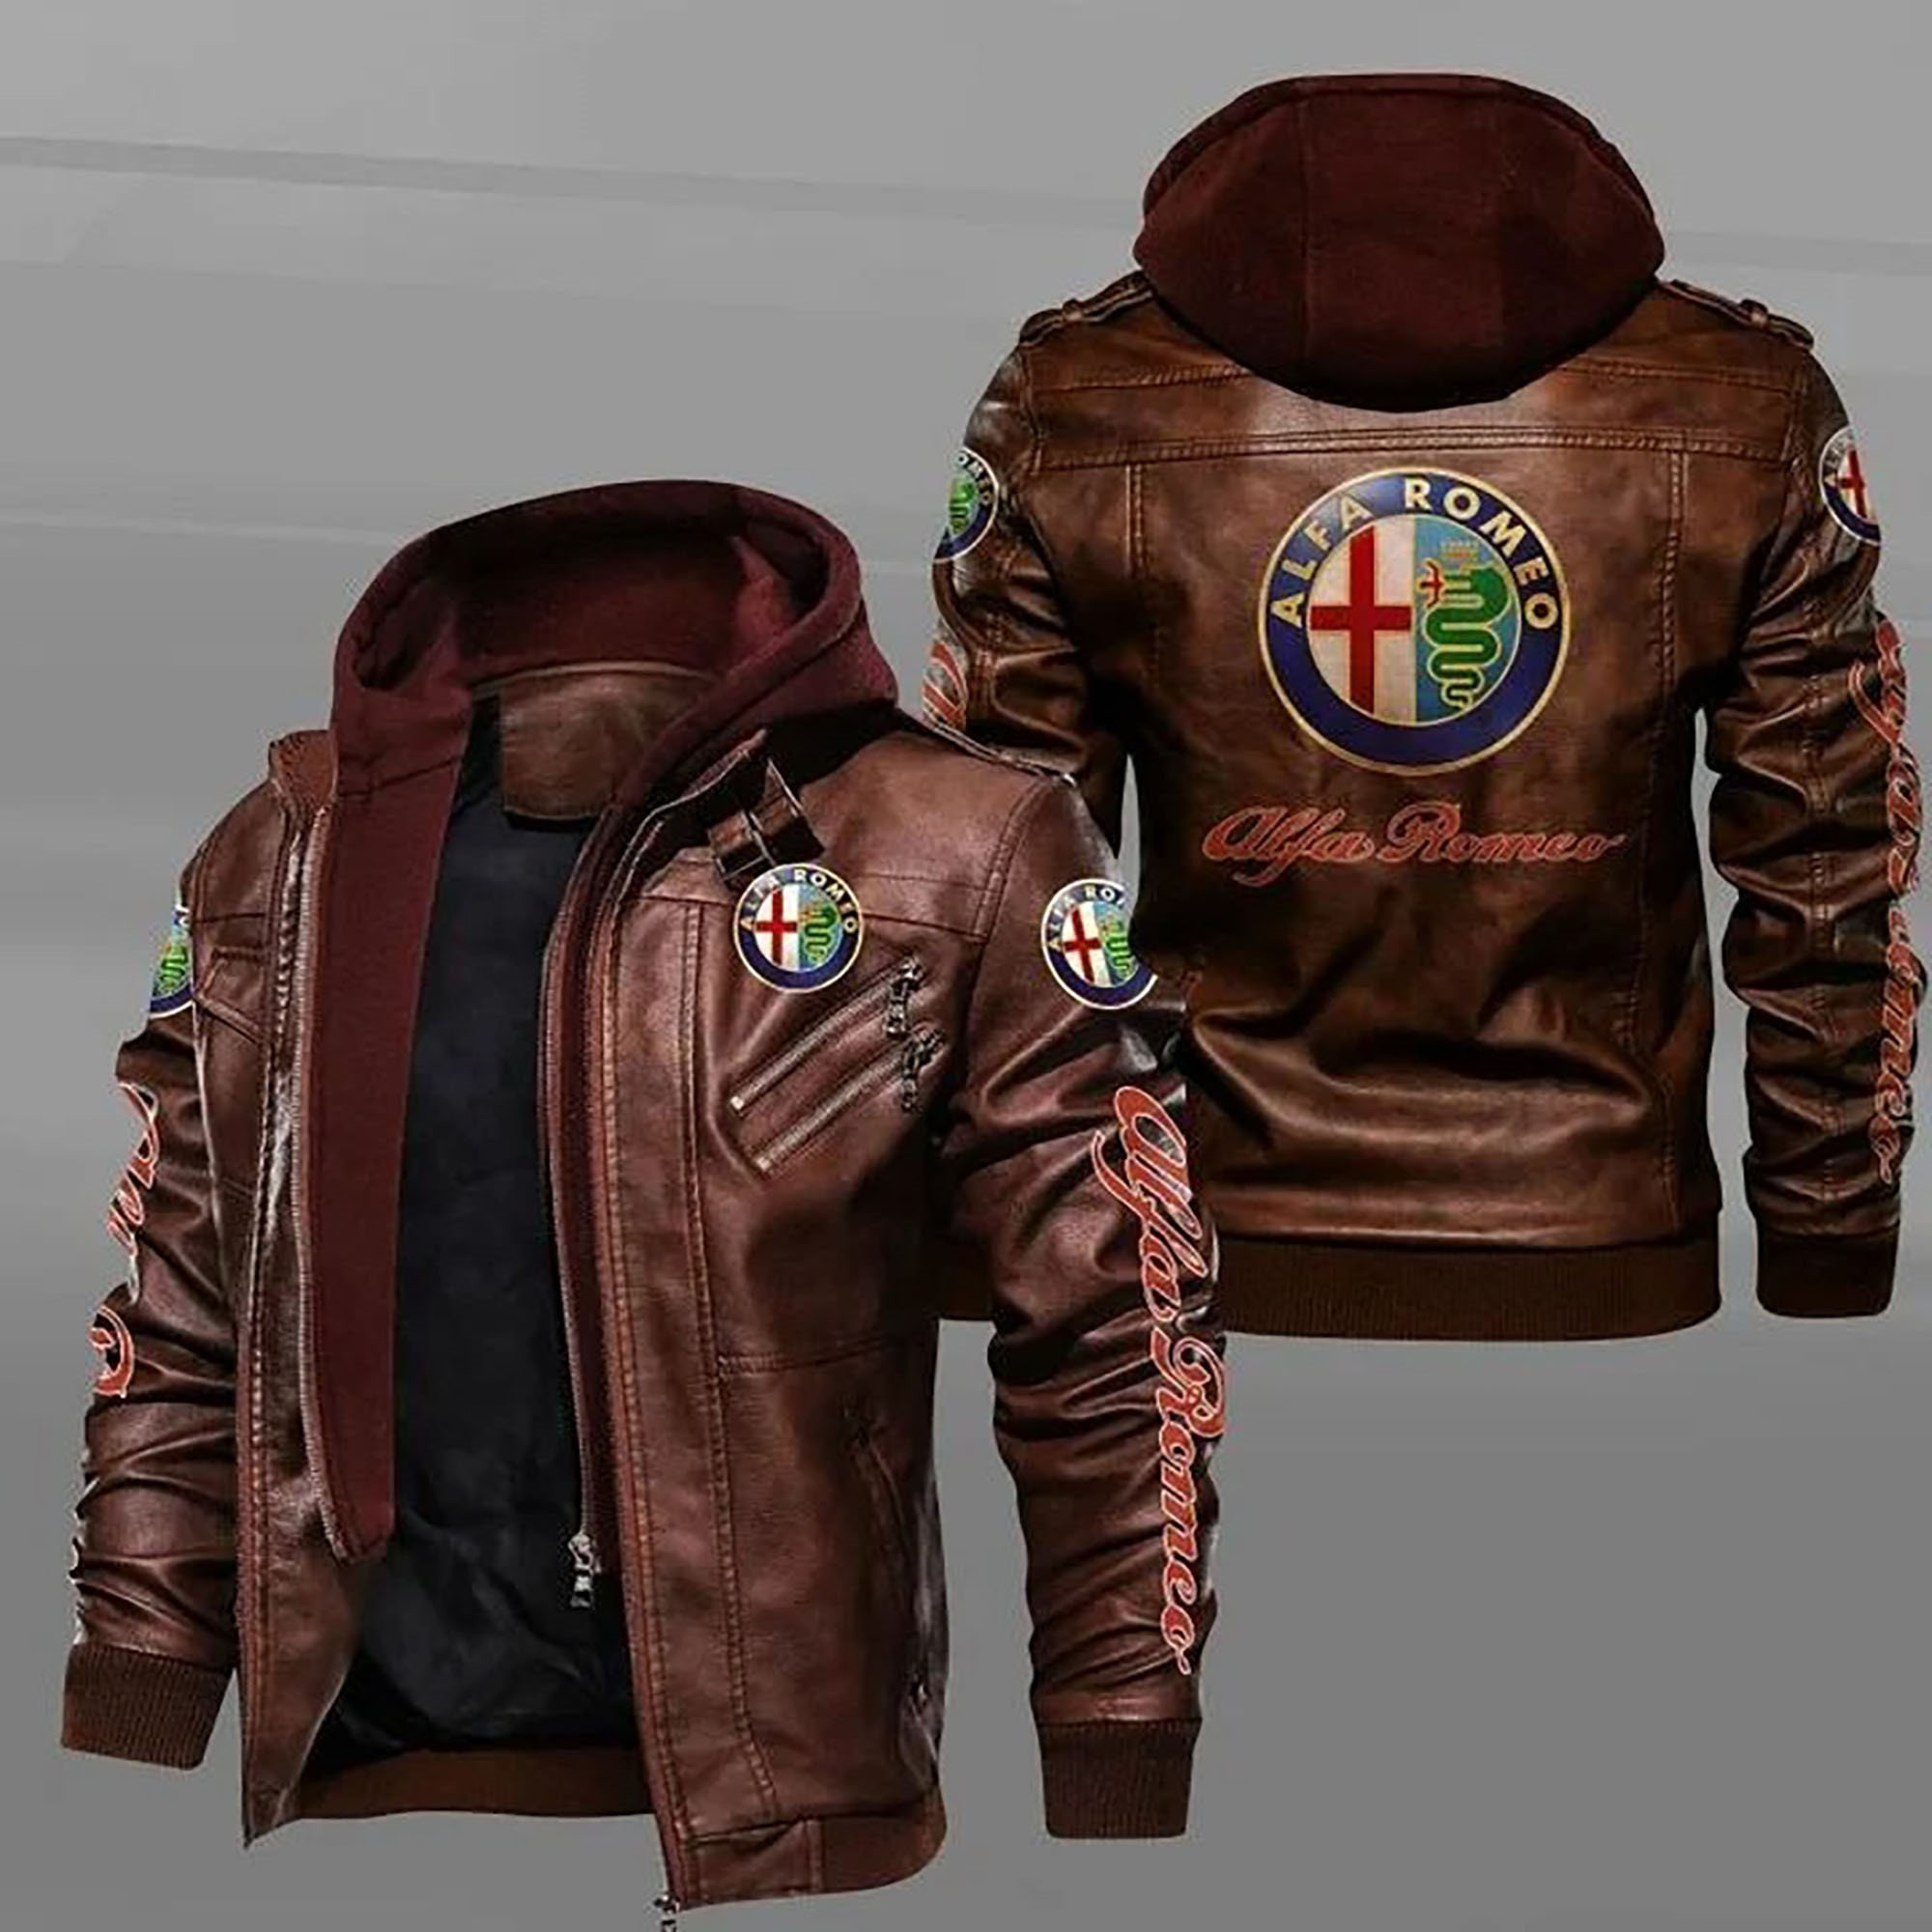 Choosing Leather Jacket that looks good on you below 206